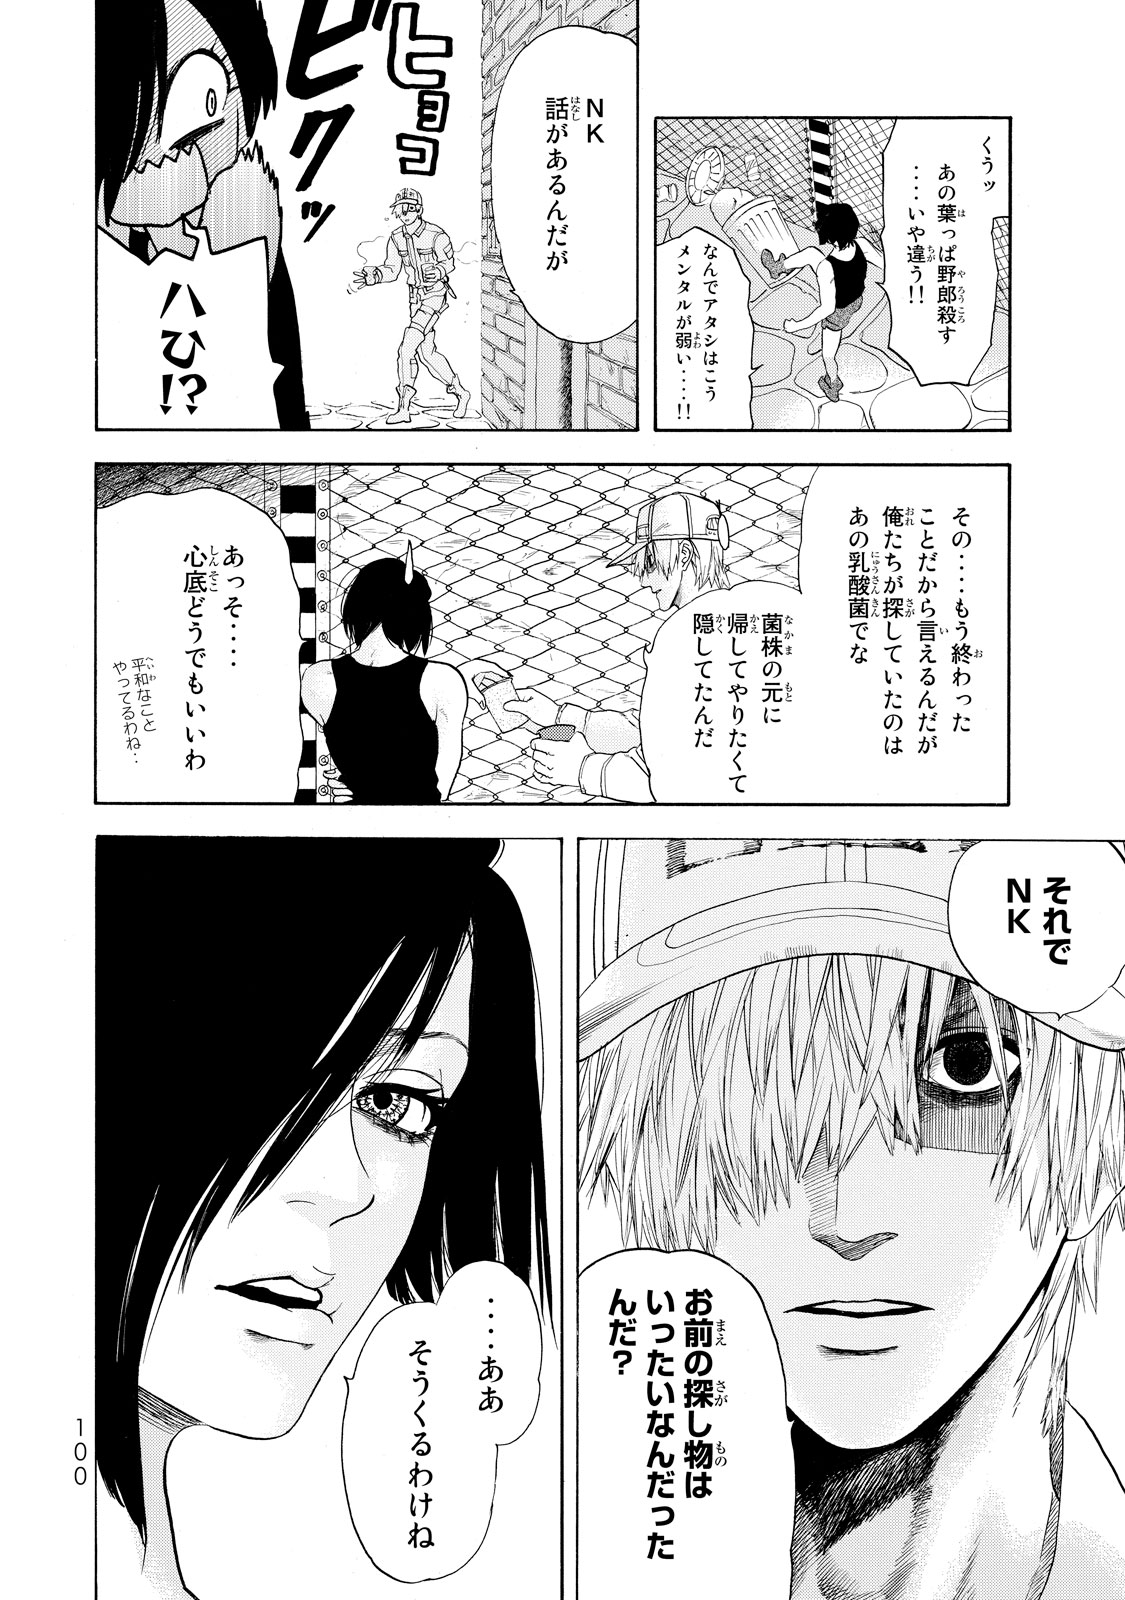 Hataraku Saibou - Chapter 22 - Page 26